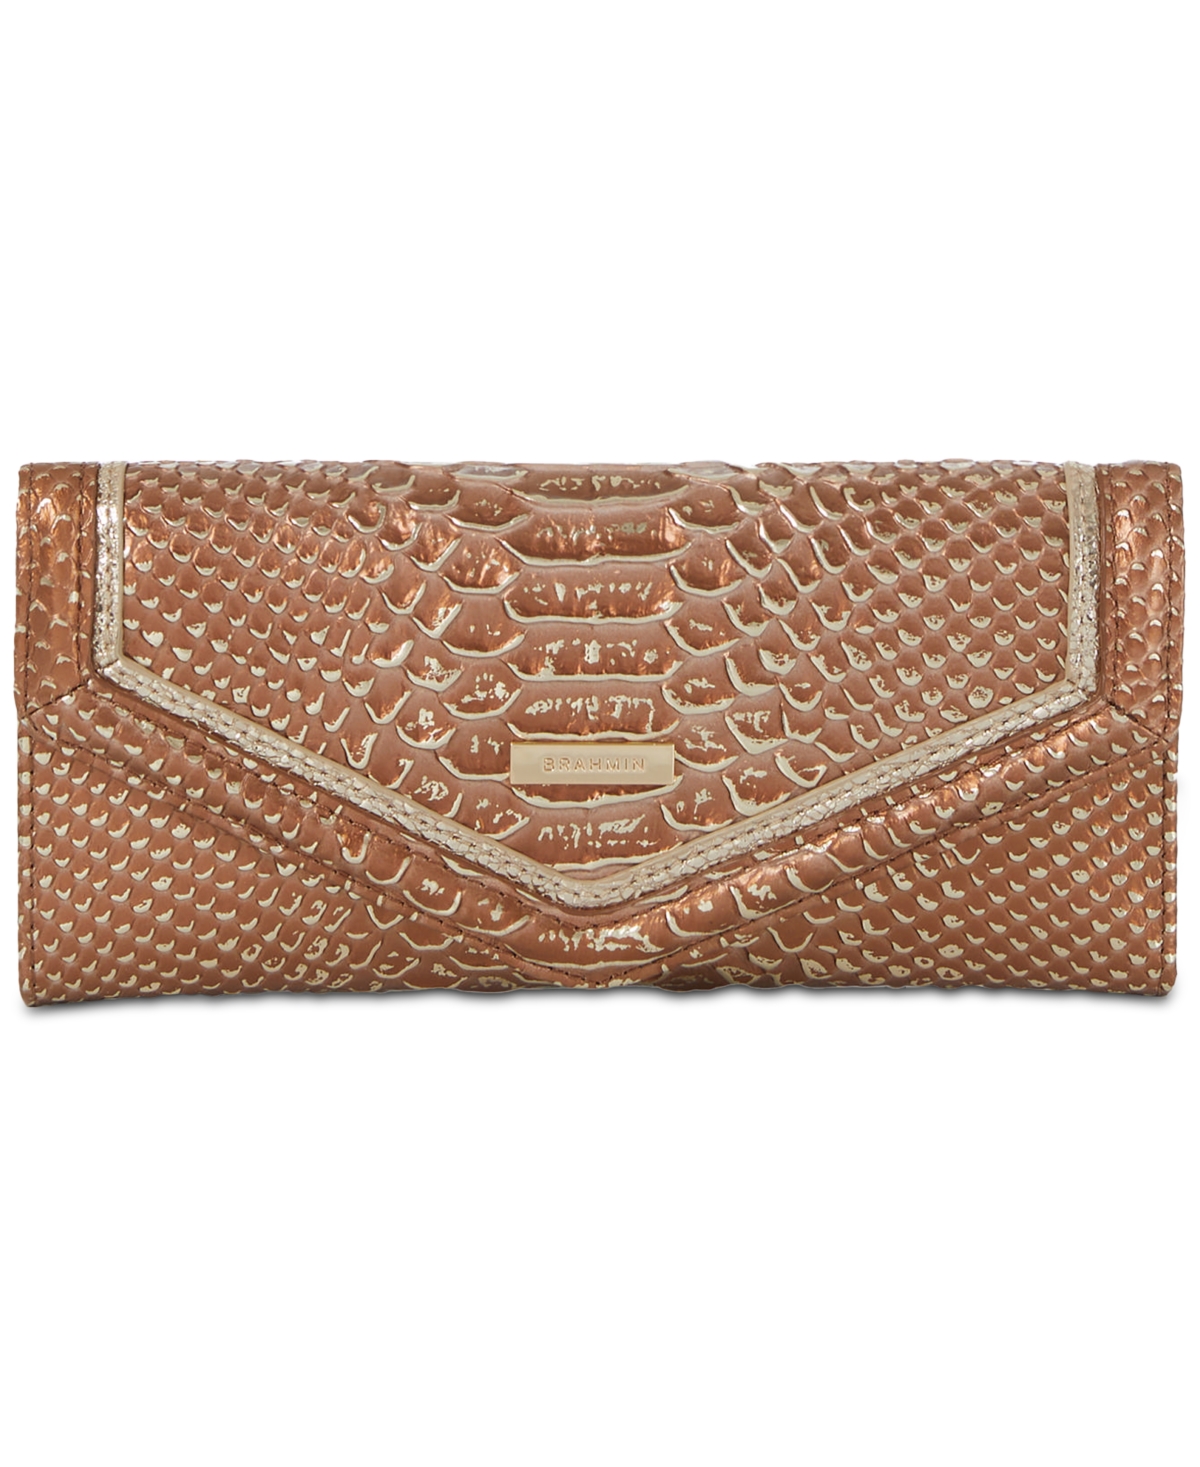 Veronica Honey Brown Sandalwood Leather Signature Wallet - Honey Brow